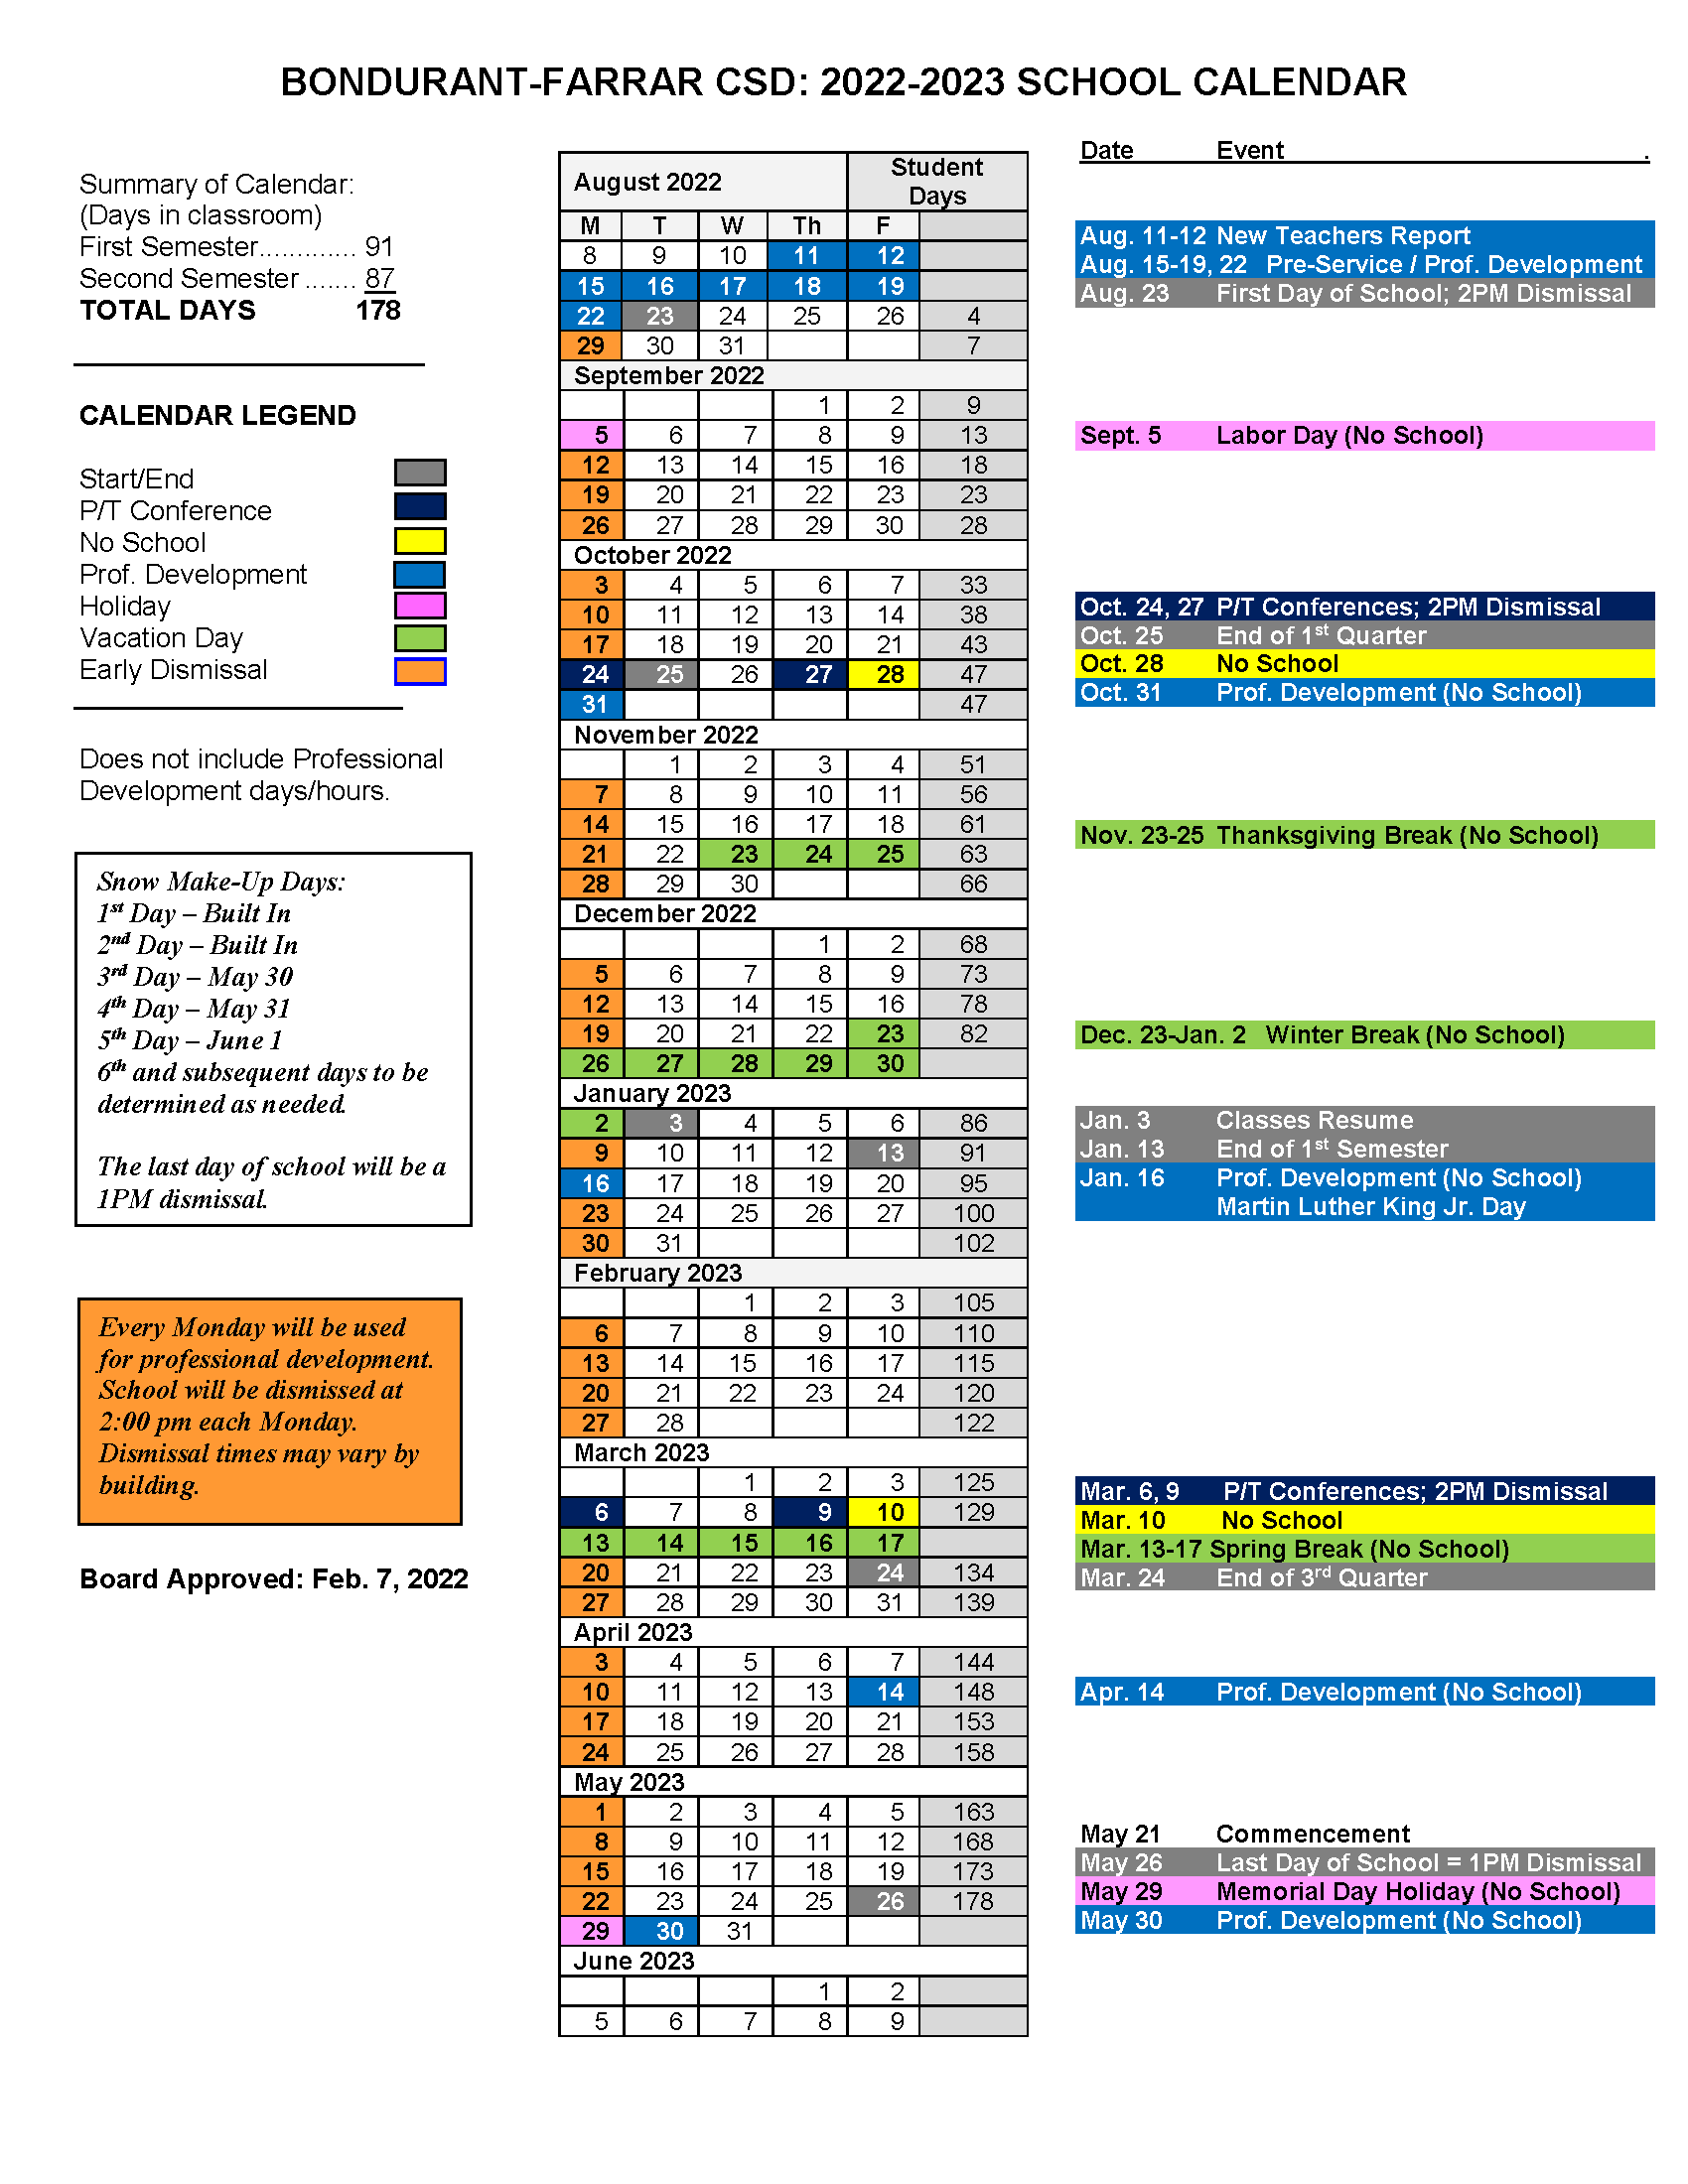 2022-23 school calendar